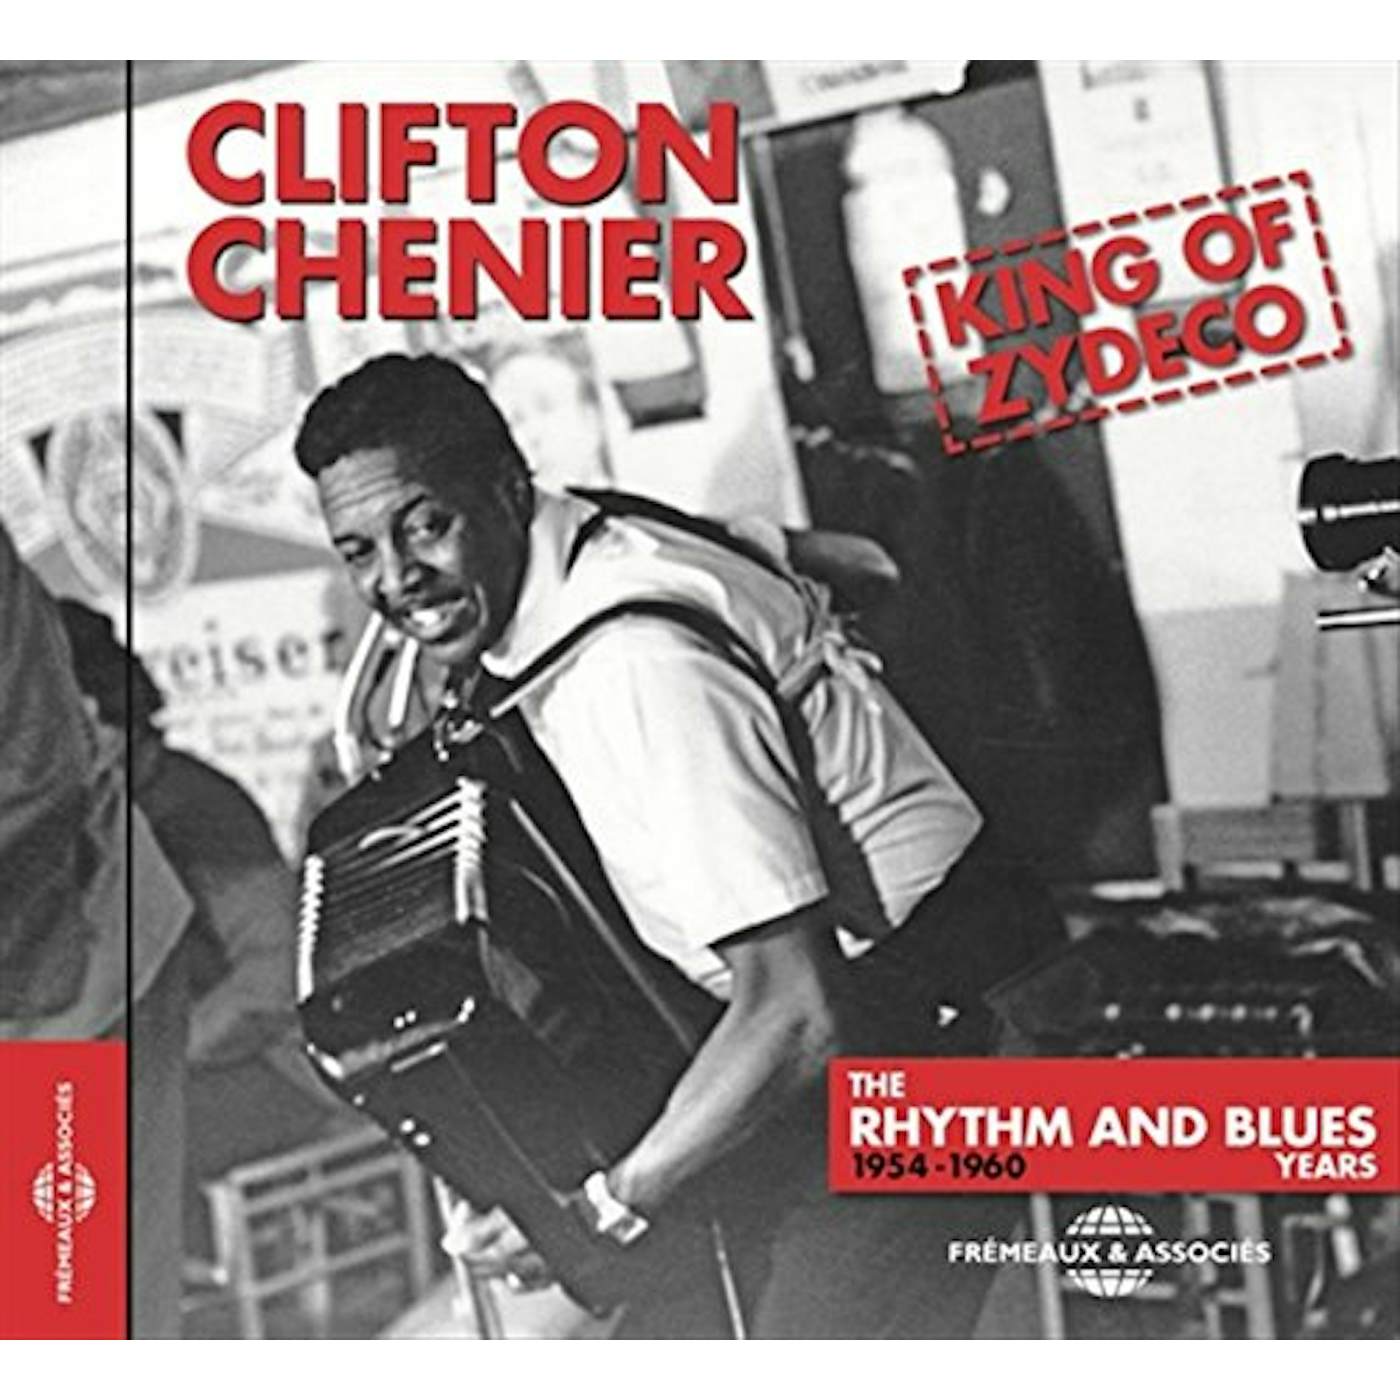 Clifton Chenier KING OF ZYDECO THE RHYTHM & BLUES YEARS 1954-1960 CD